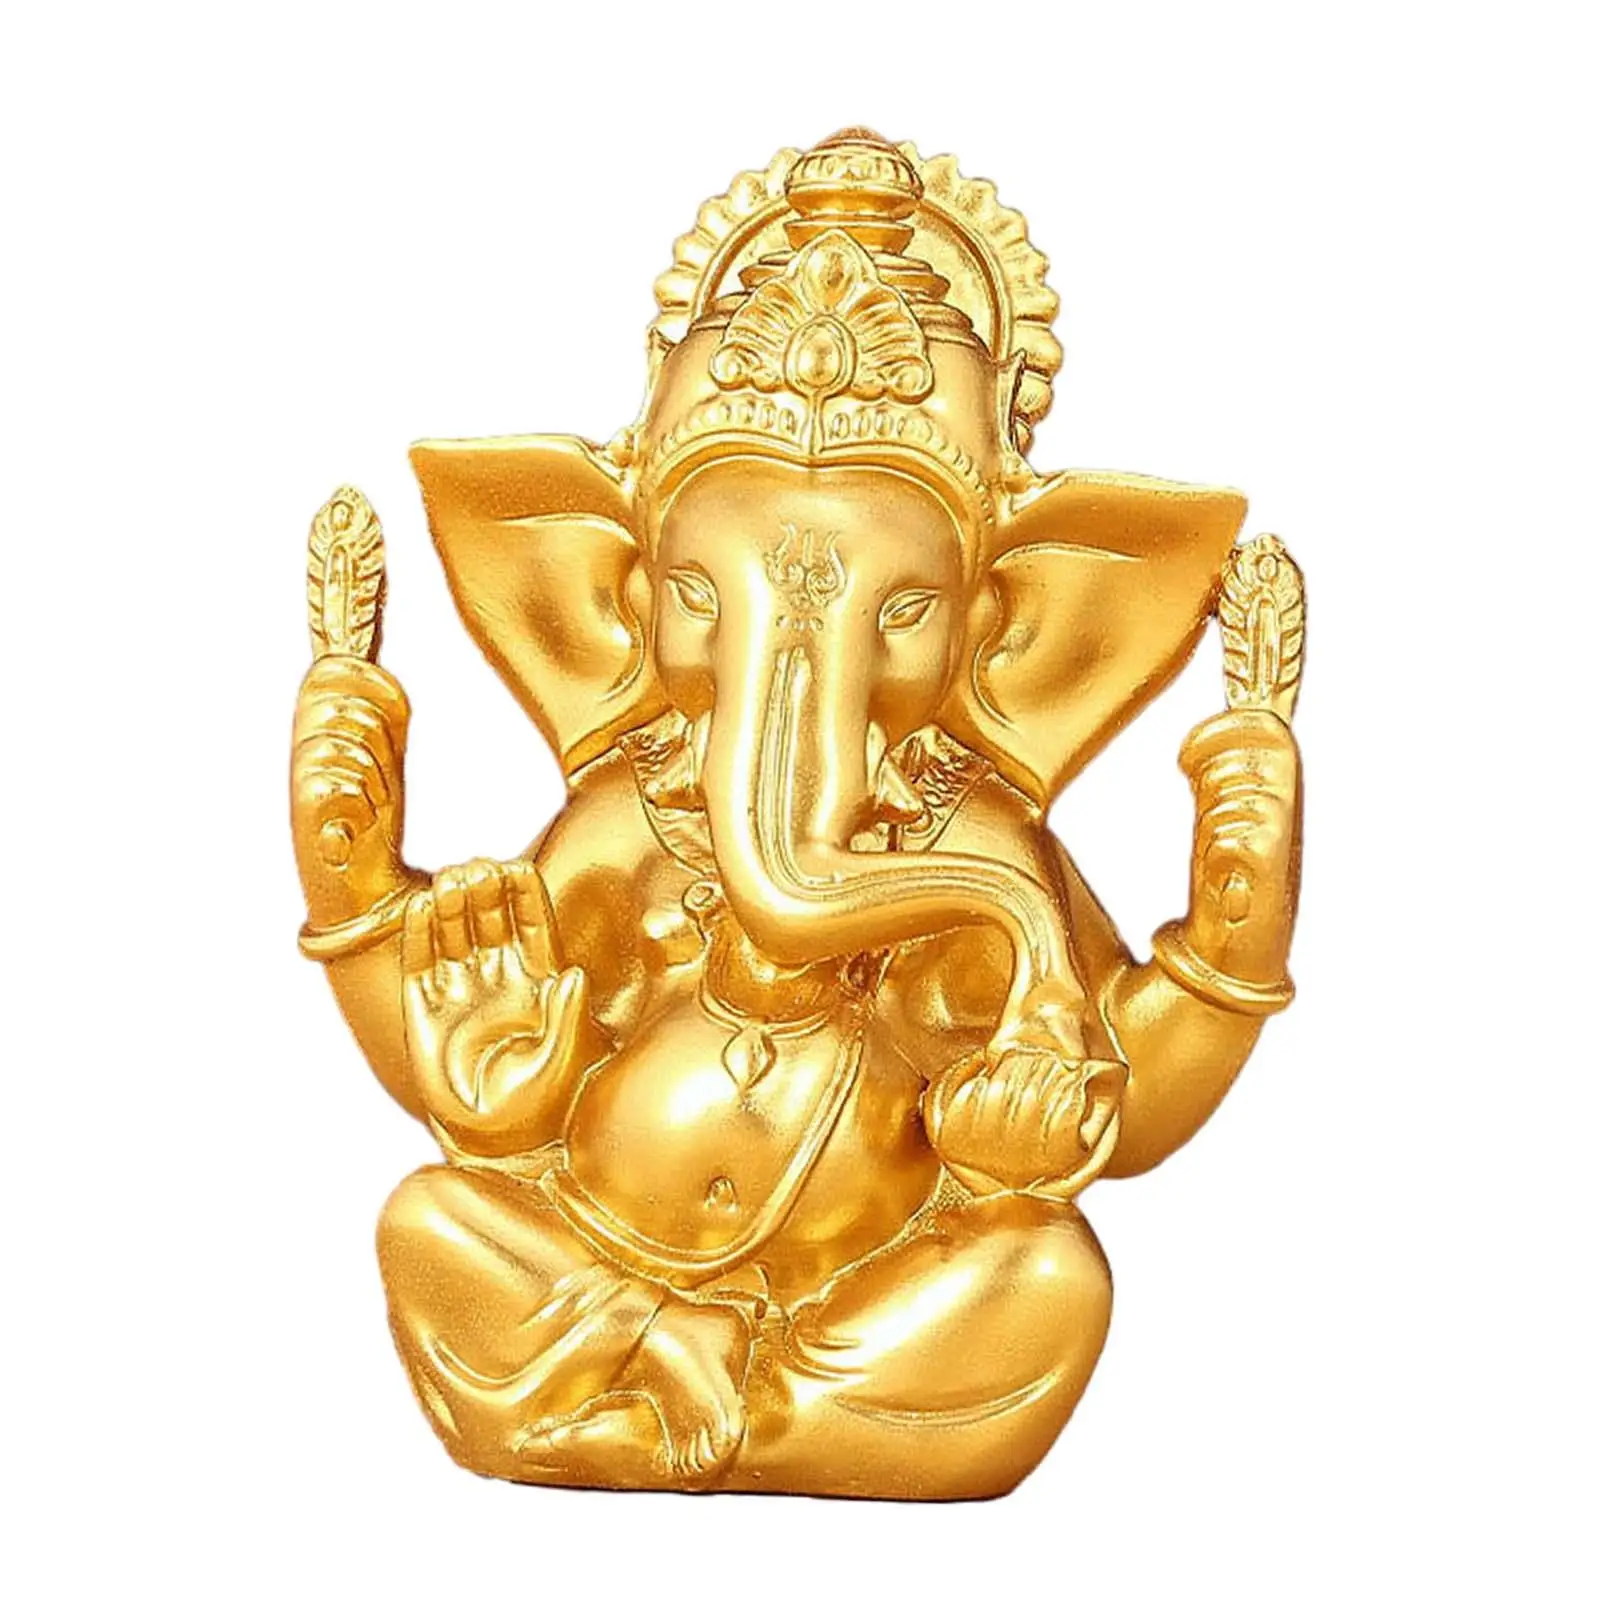 Indian Ganesha Figurine Hindu God Decorative Ganesh Statue Elephant Buddha Statue for Office Desk Car Dashboard Shelf Home Decor